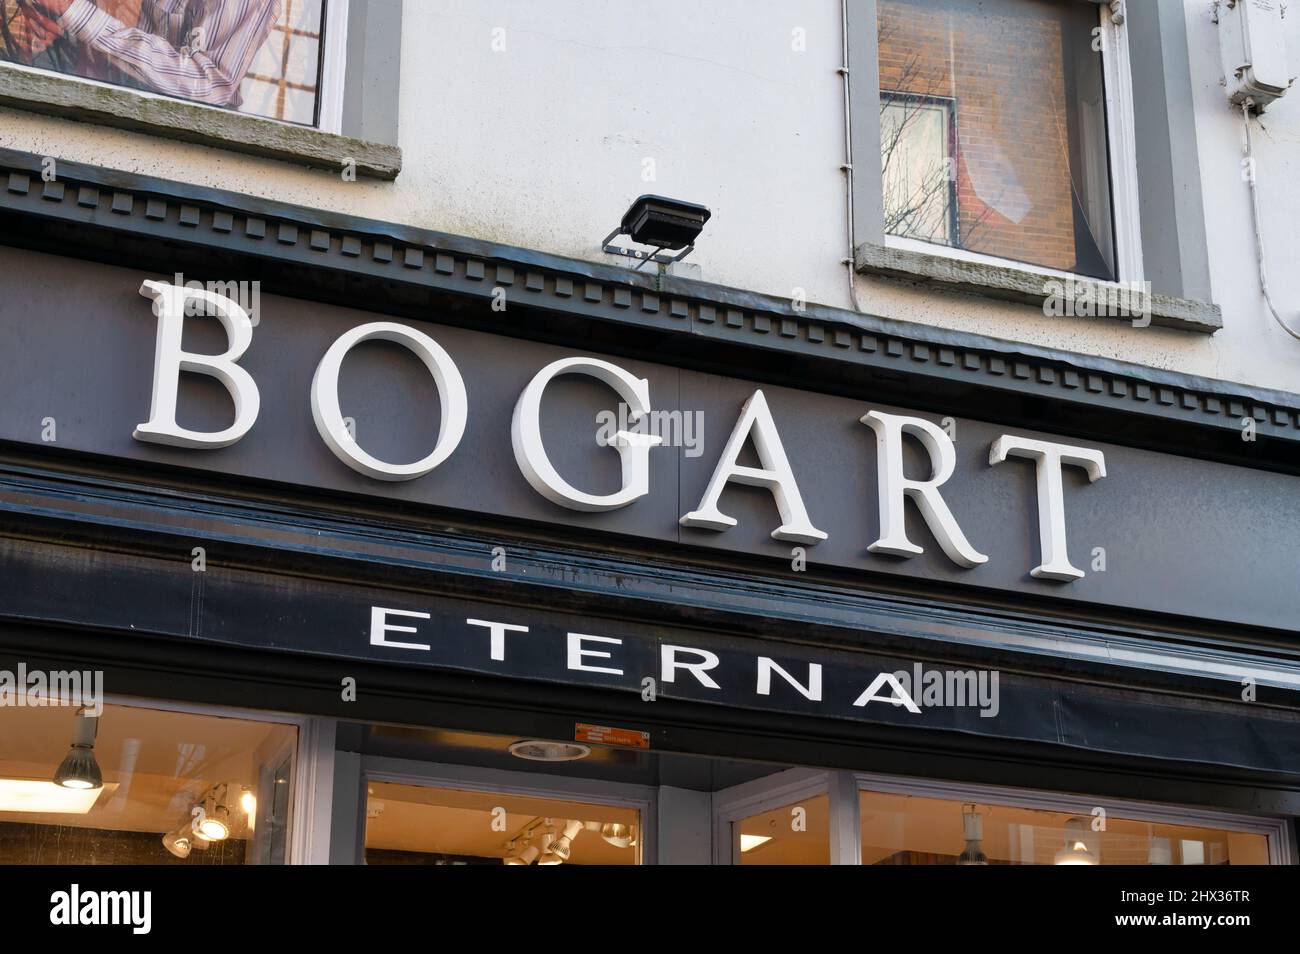 Belfast, UK- Feb 19, 2022: The sign for Bogart Menswear store in Belfast Northern Ireland. Stock Photo